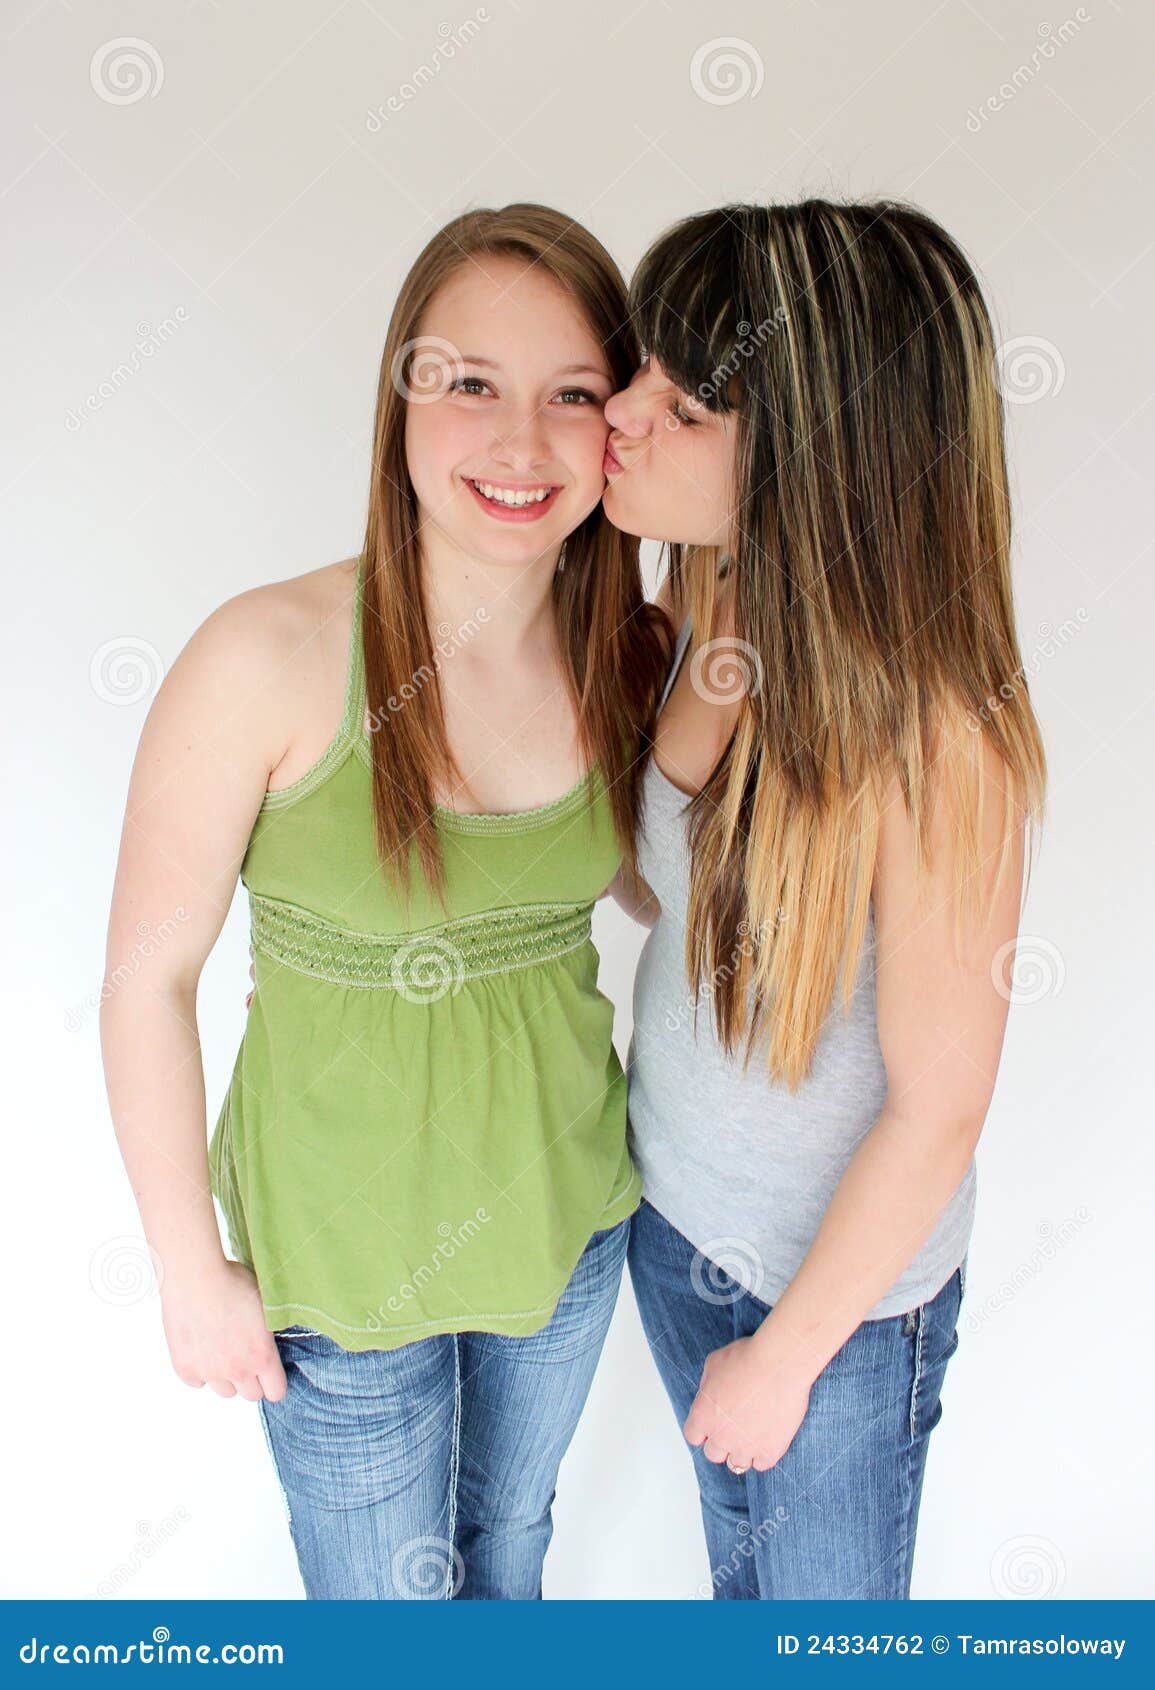 girls teenage Teenage girls kissing